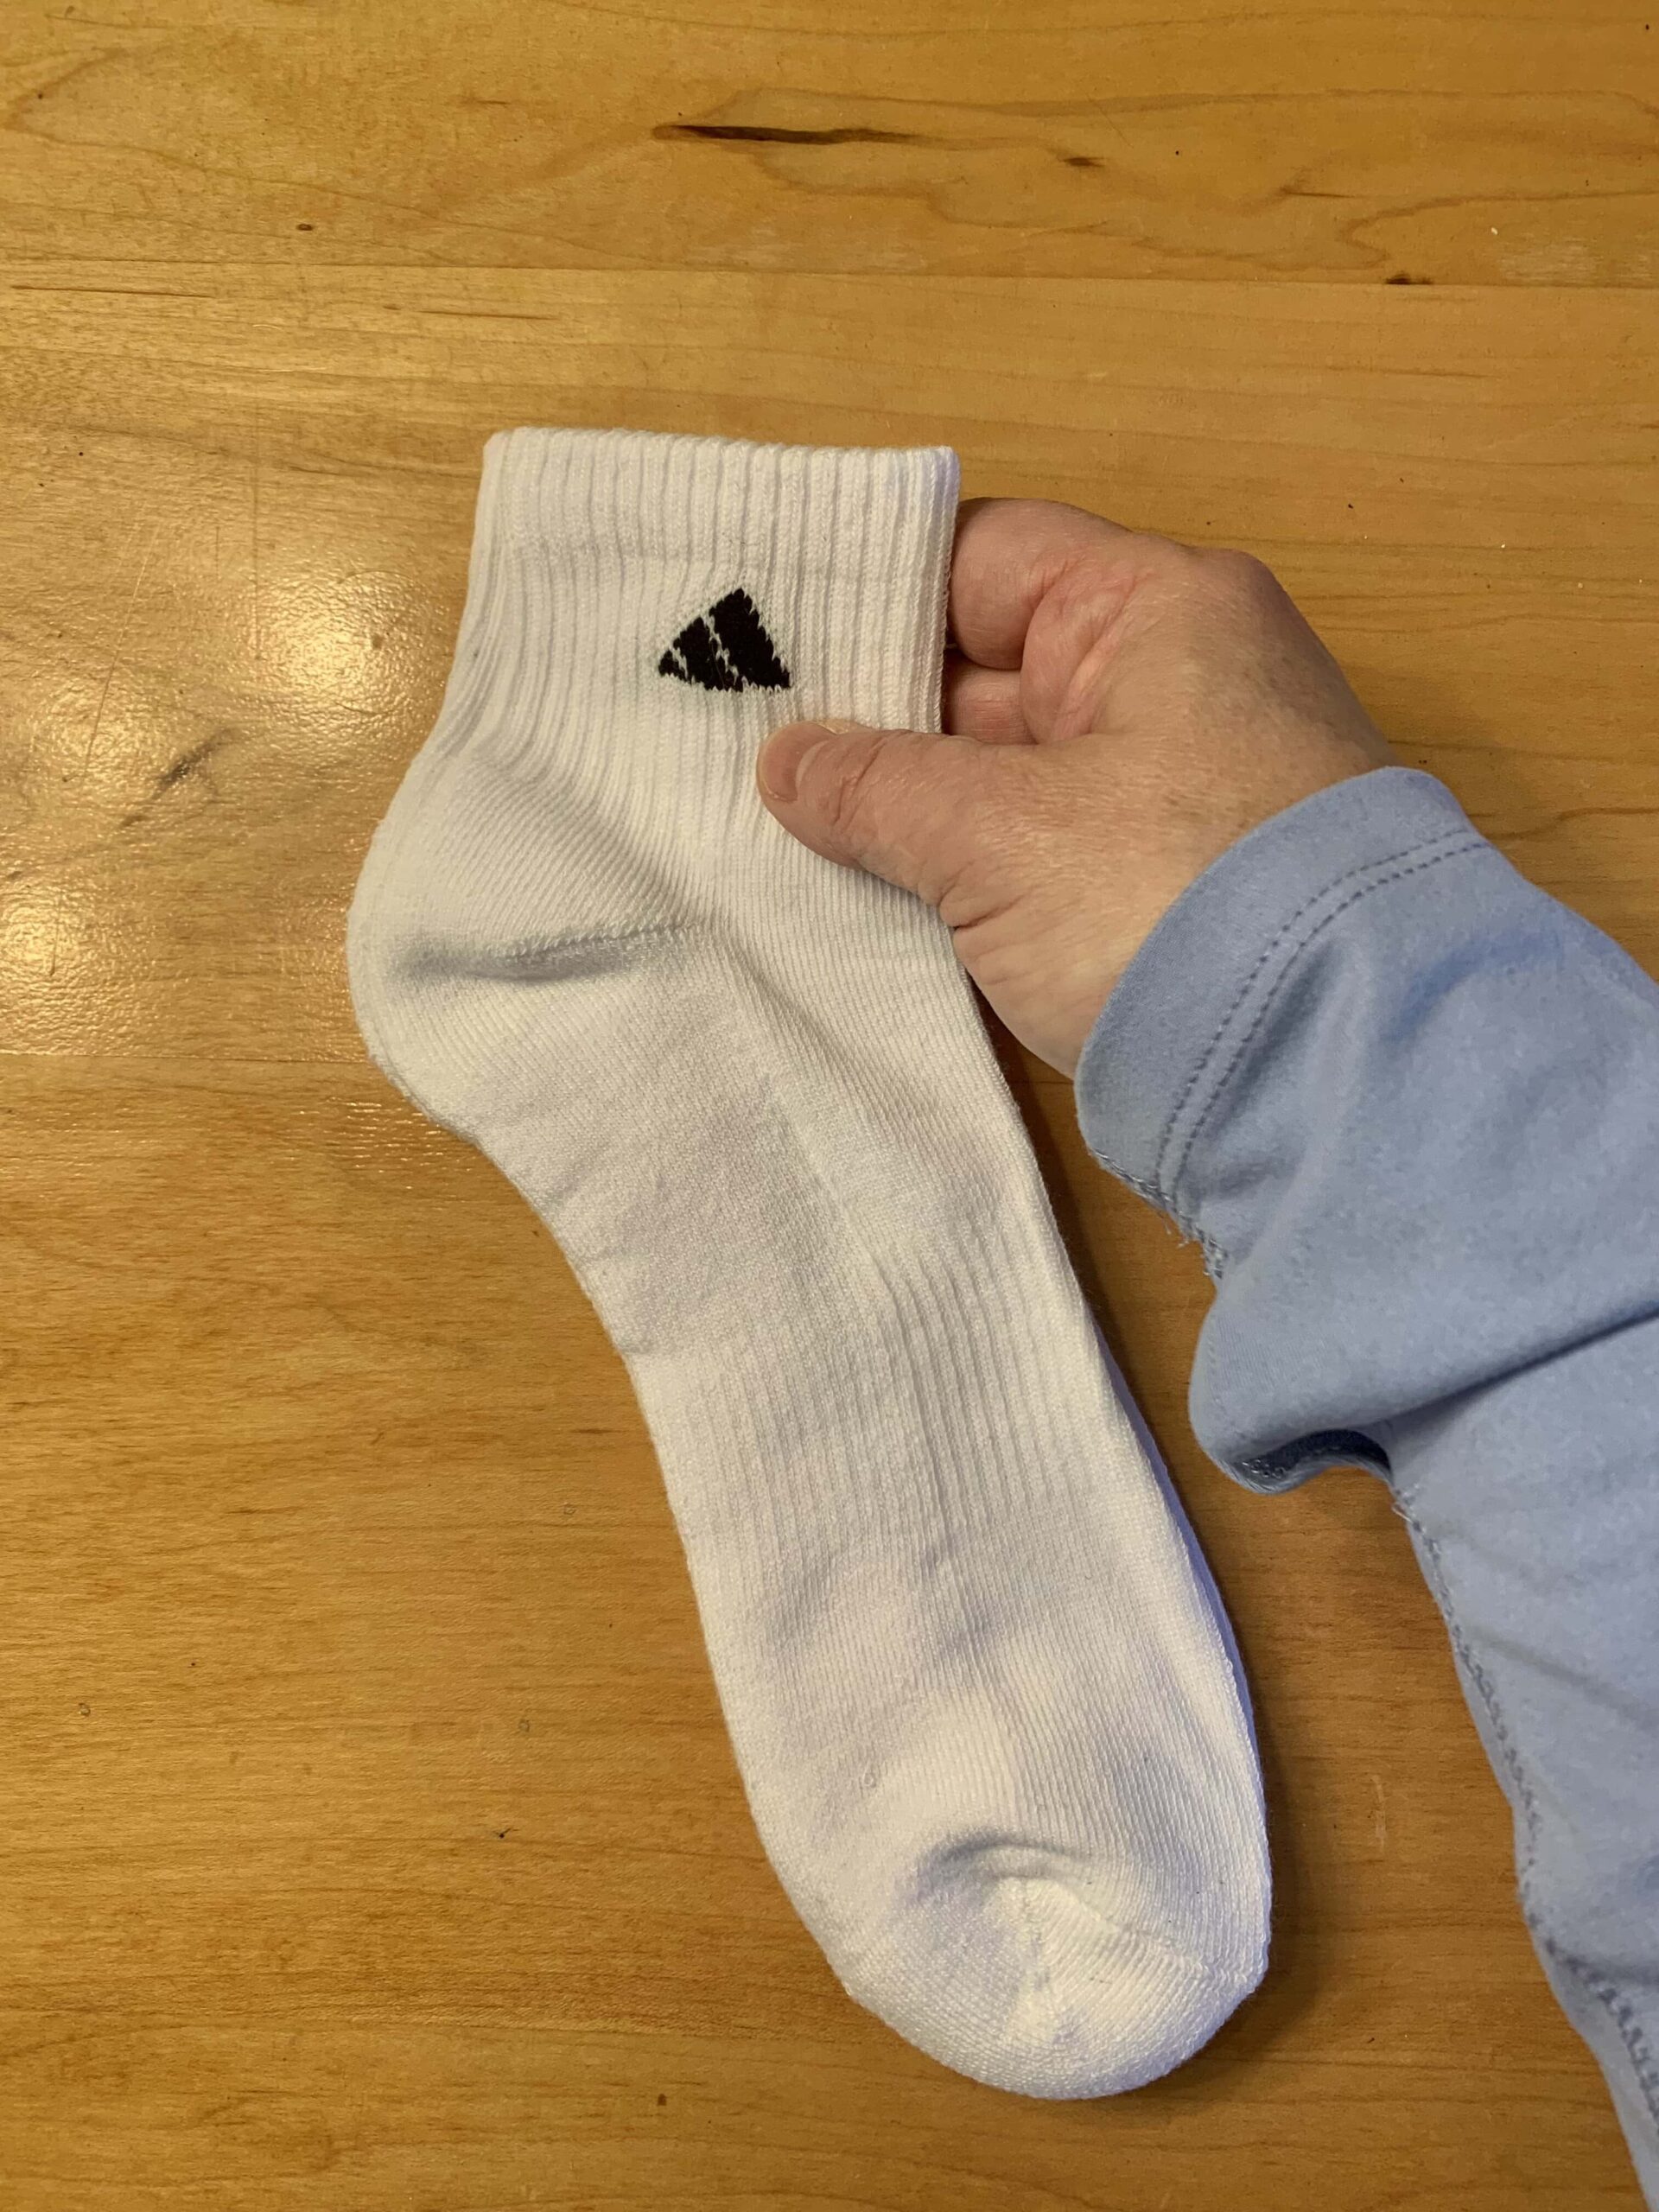 How to fold socks the KonMari method. 